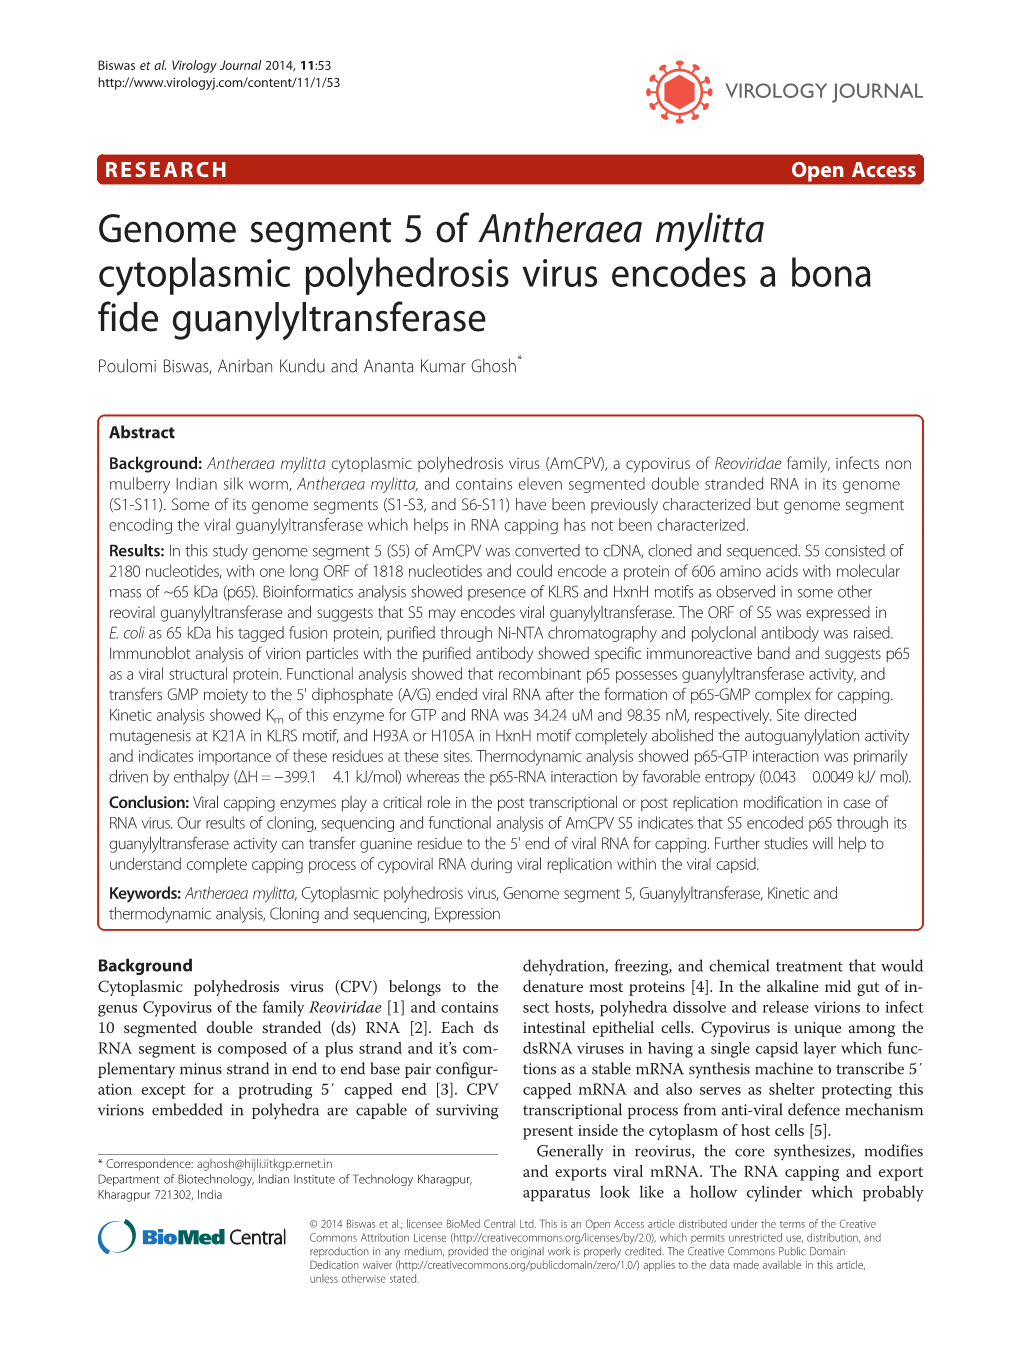 Genome Segment 5 of Antheraea Mylitta Cytoplasmic Polyhedrosis Virus Encodes a Bona Fide Guanylyltransferase Poulomi Biswas, Anirban Kundu and Ananta Kumar Ghosh*